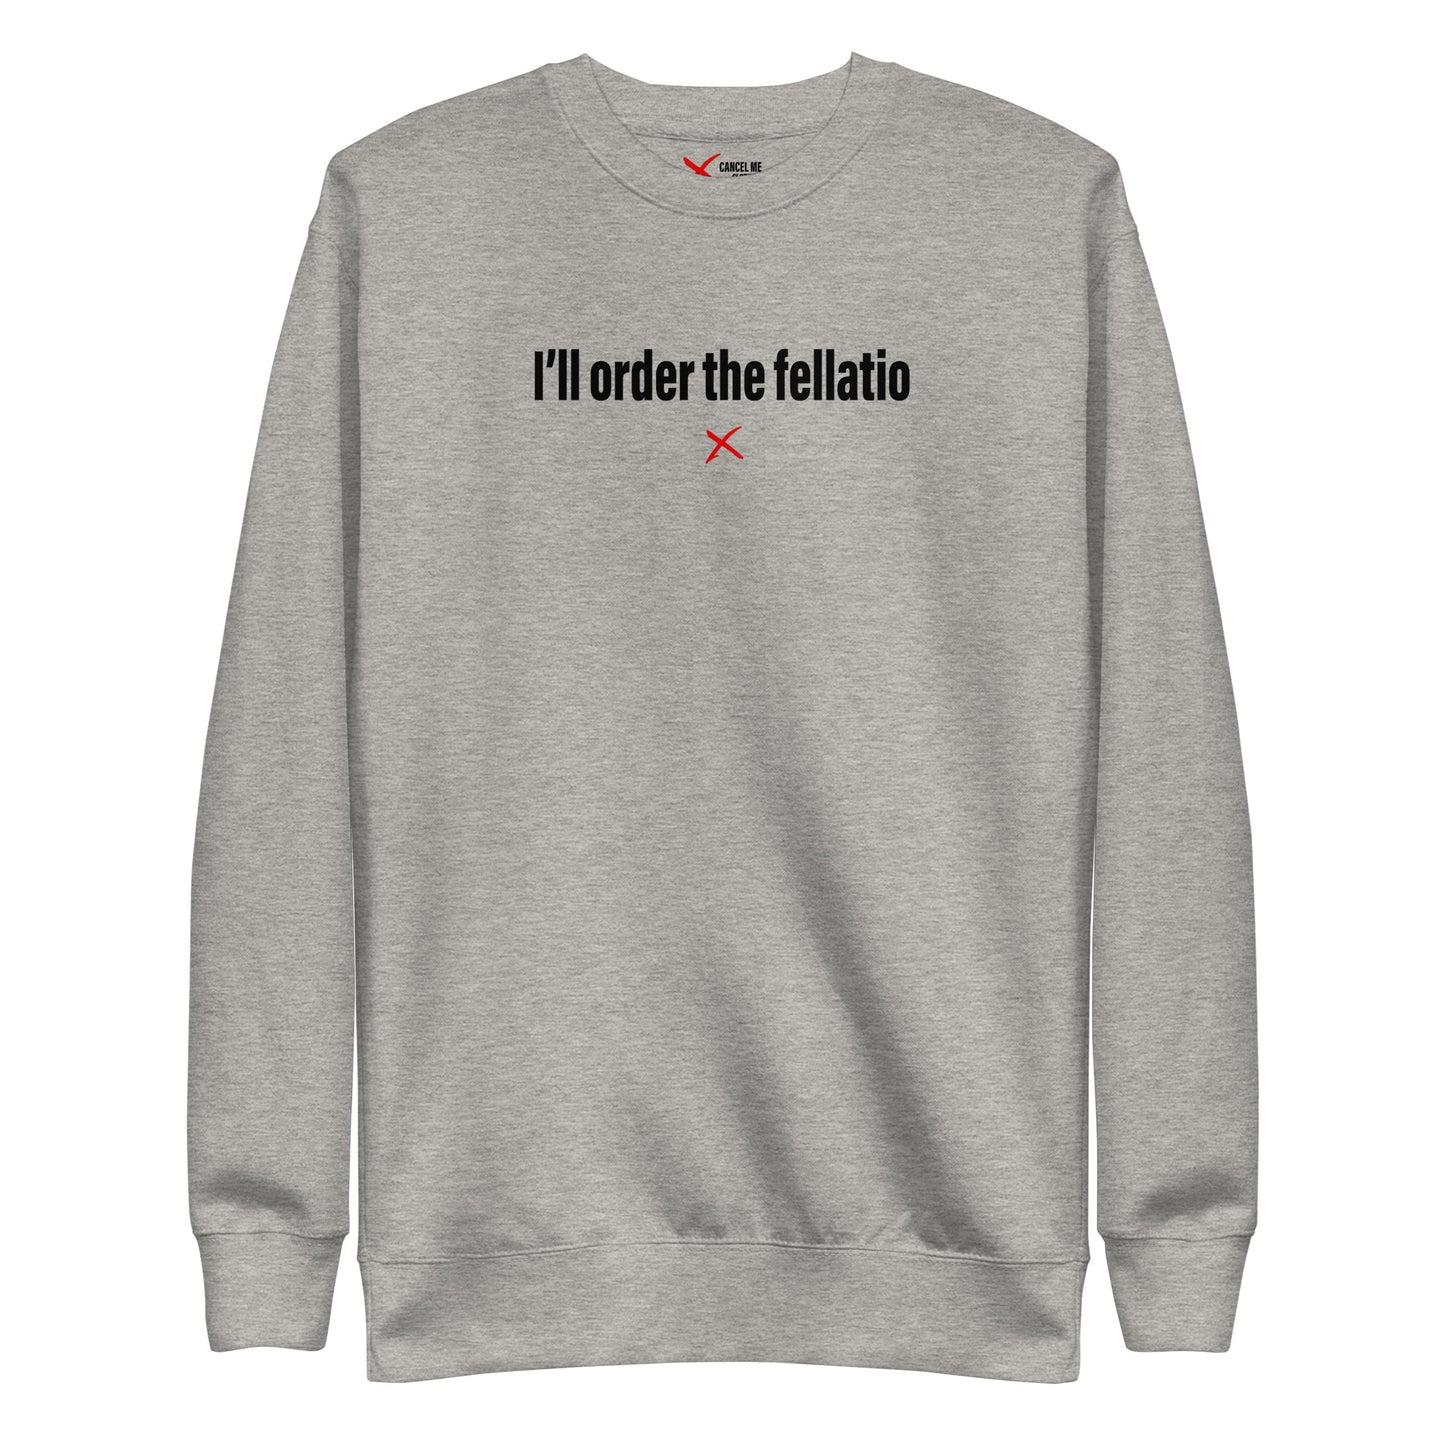 I'll order the fellatio - Sweatshirt